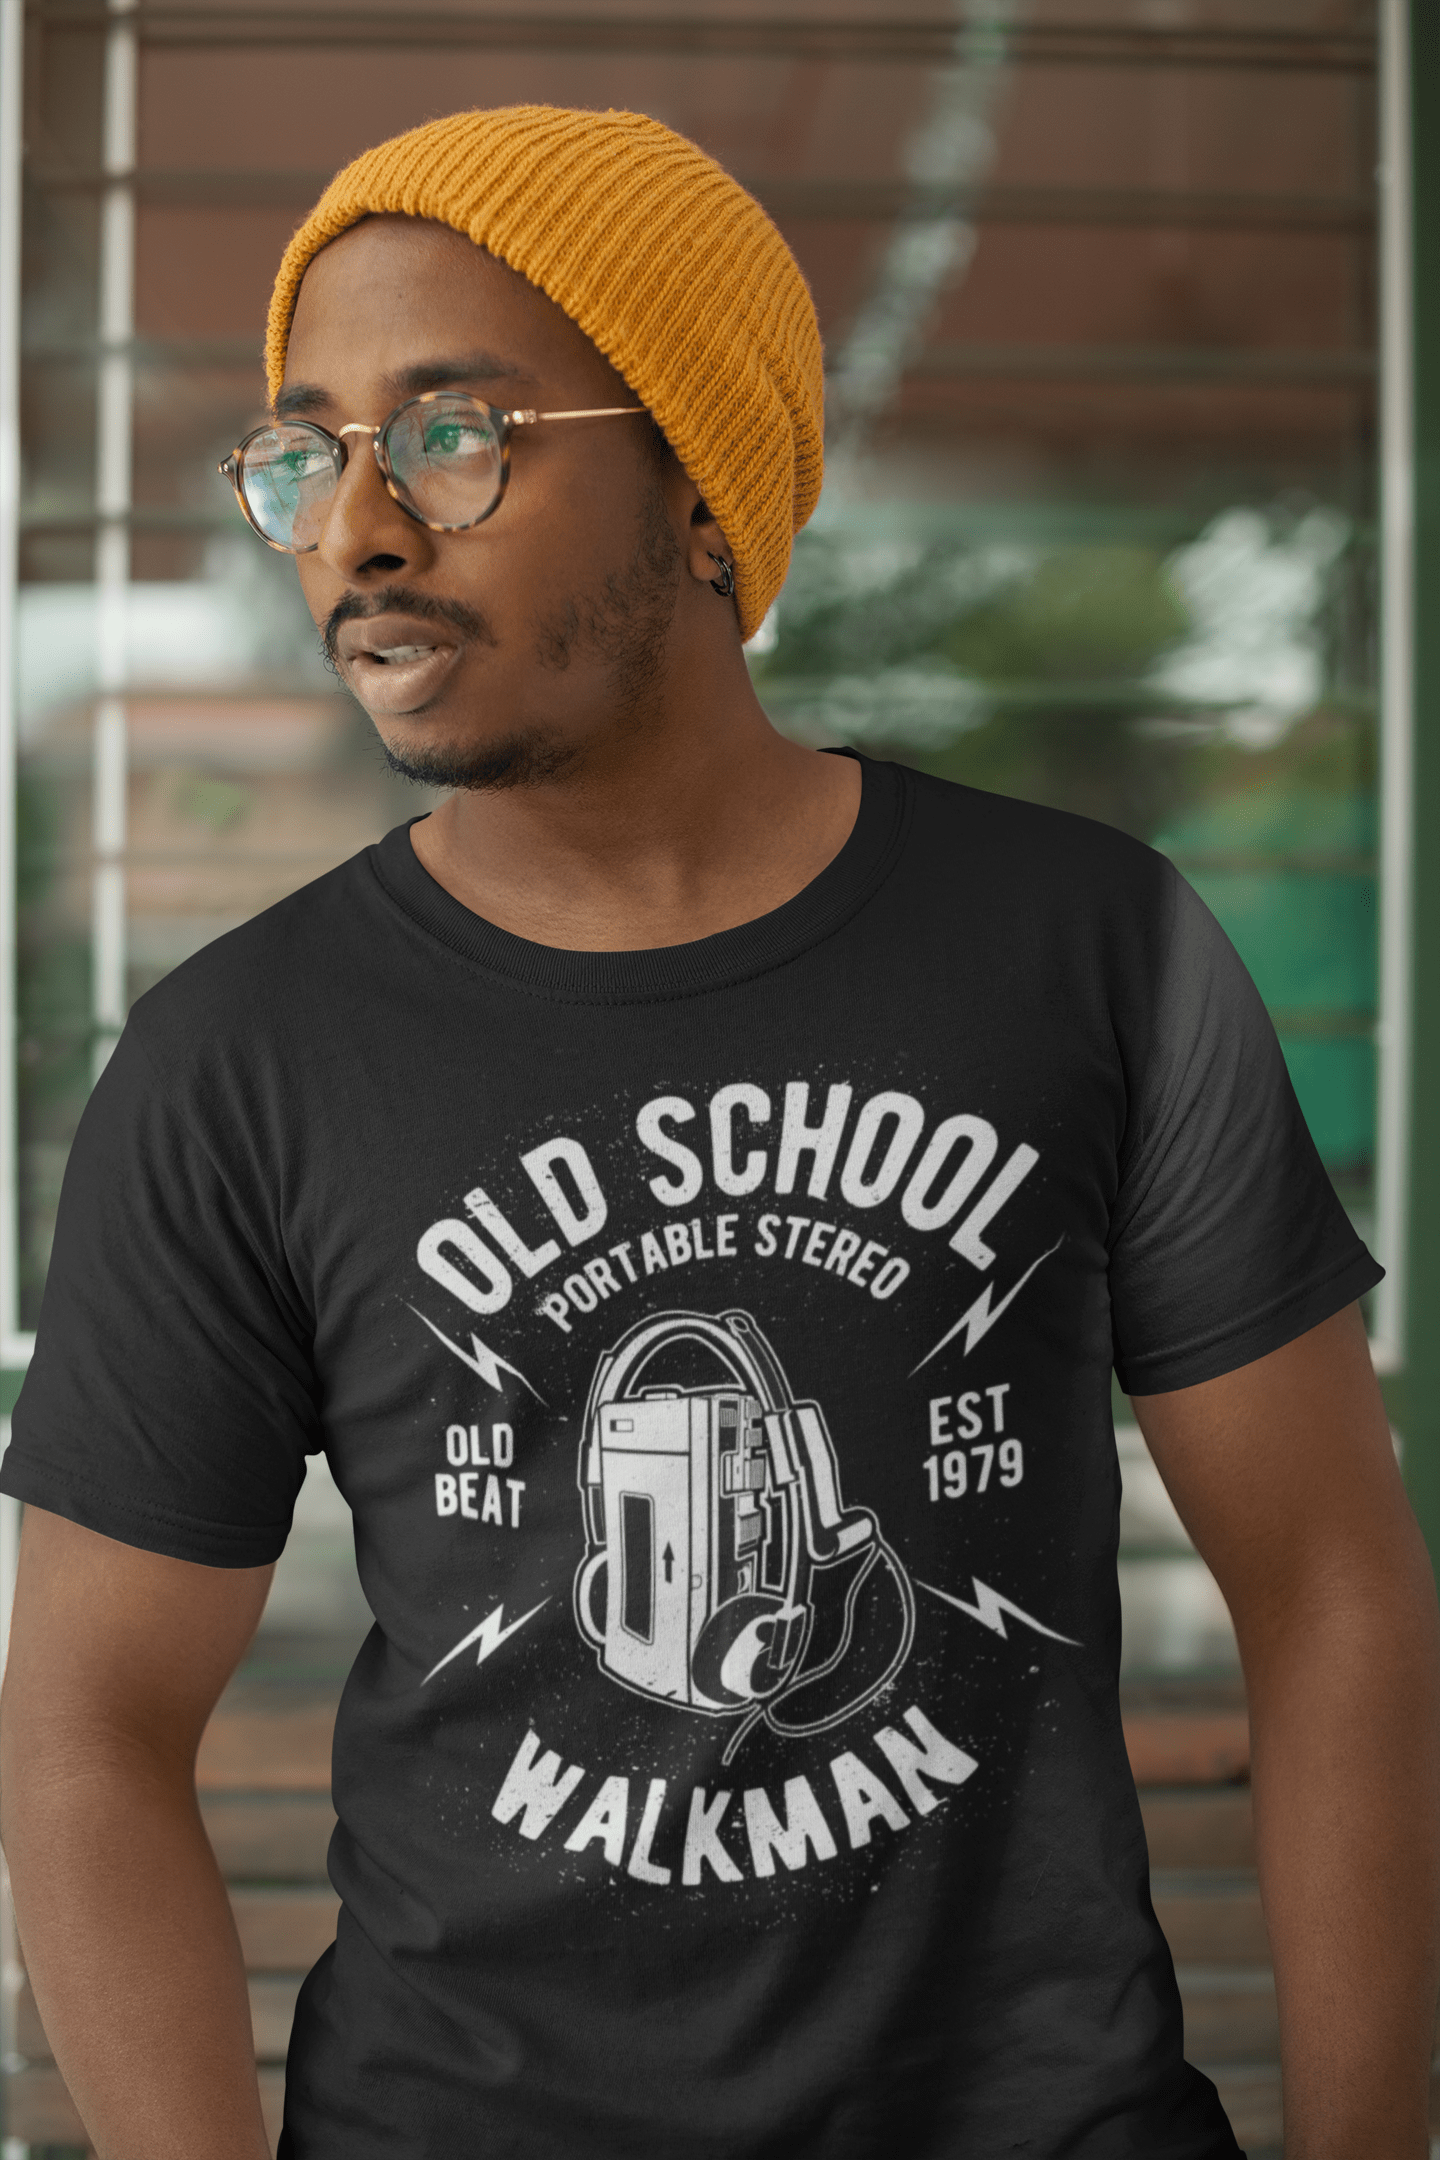 ULTRABASIC Men's T-Shirt Old School Portable Stereo Walkman - Beat Since 1979 Tee Shirt